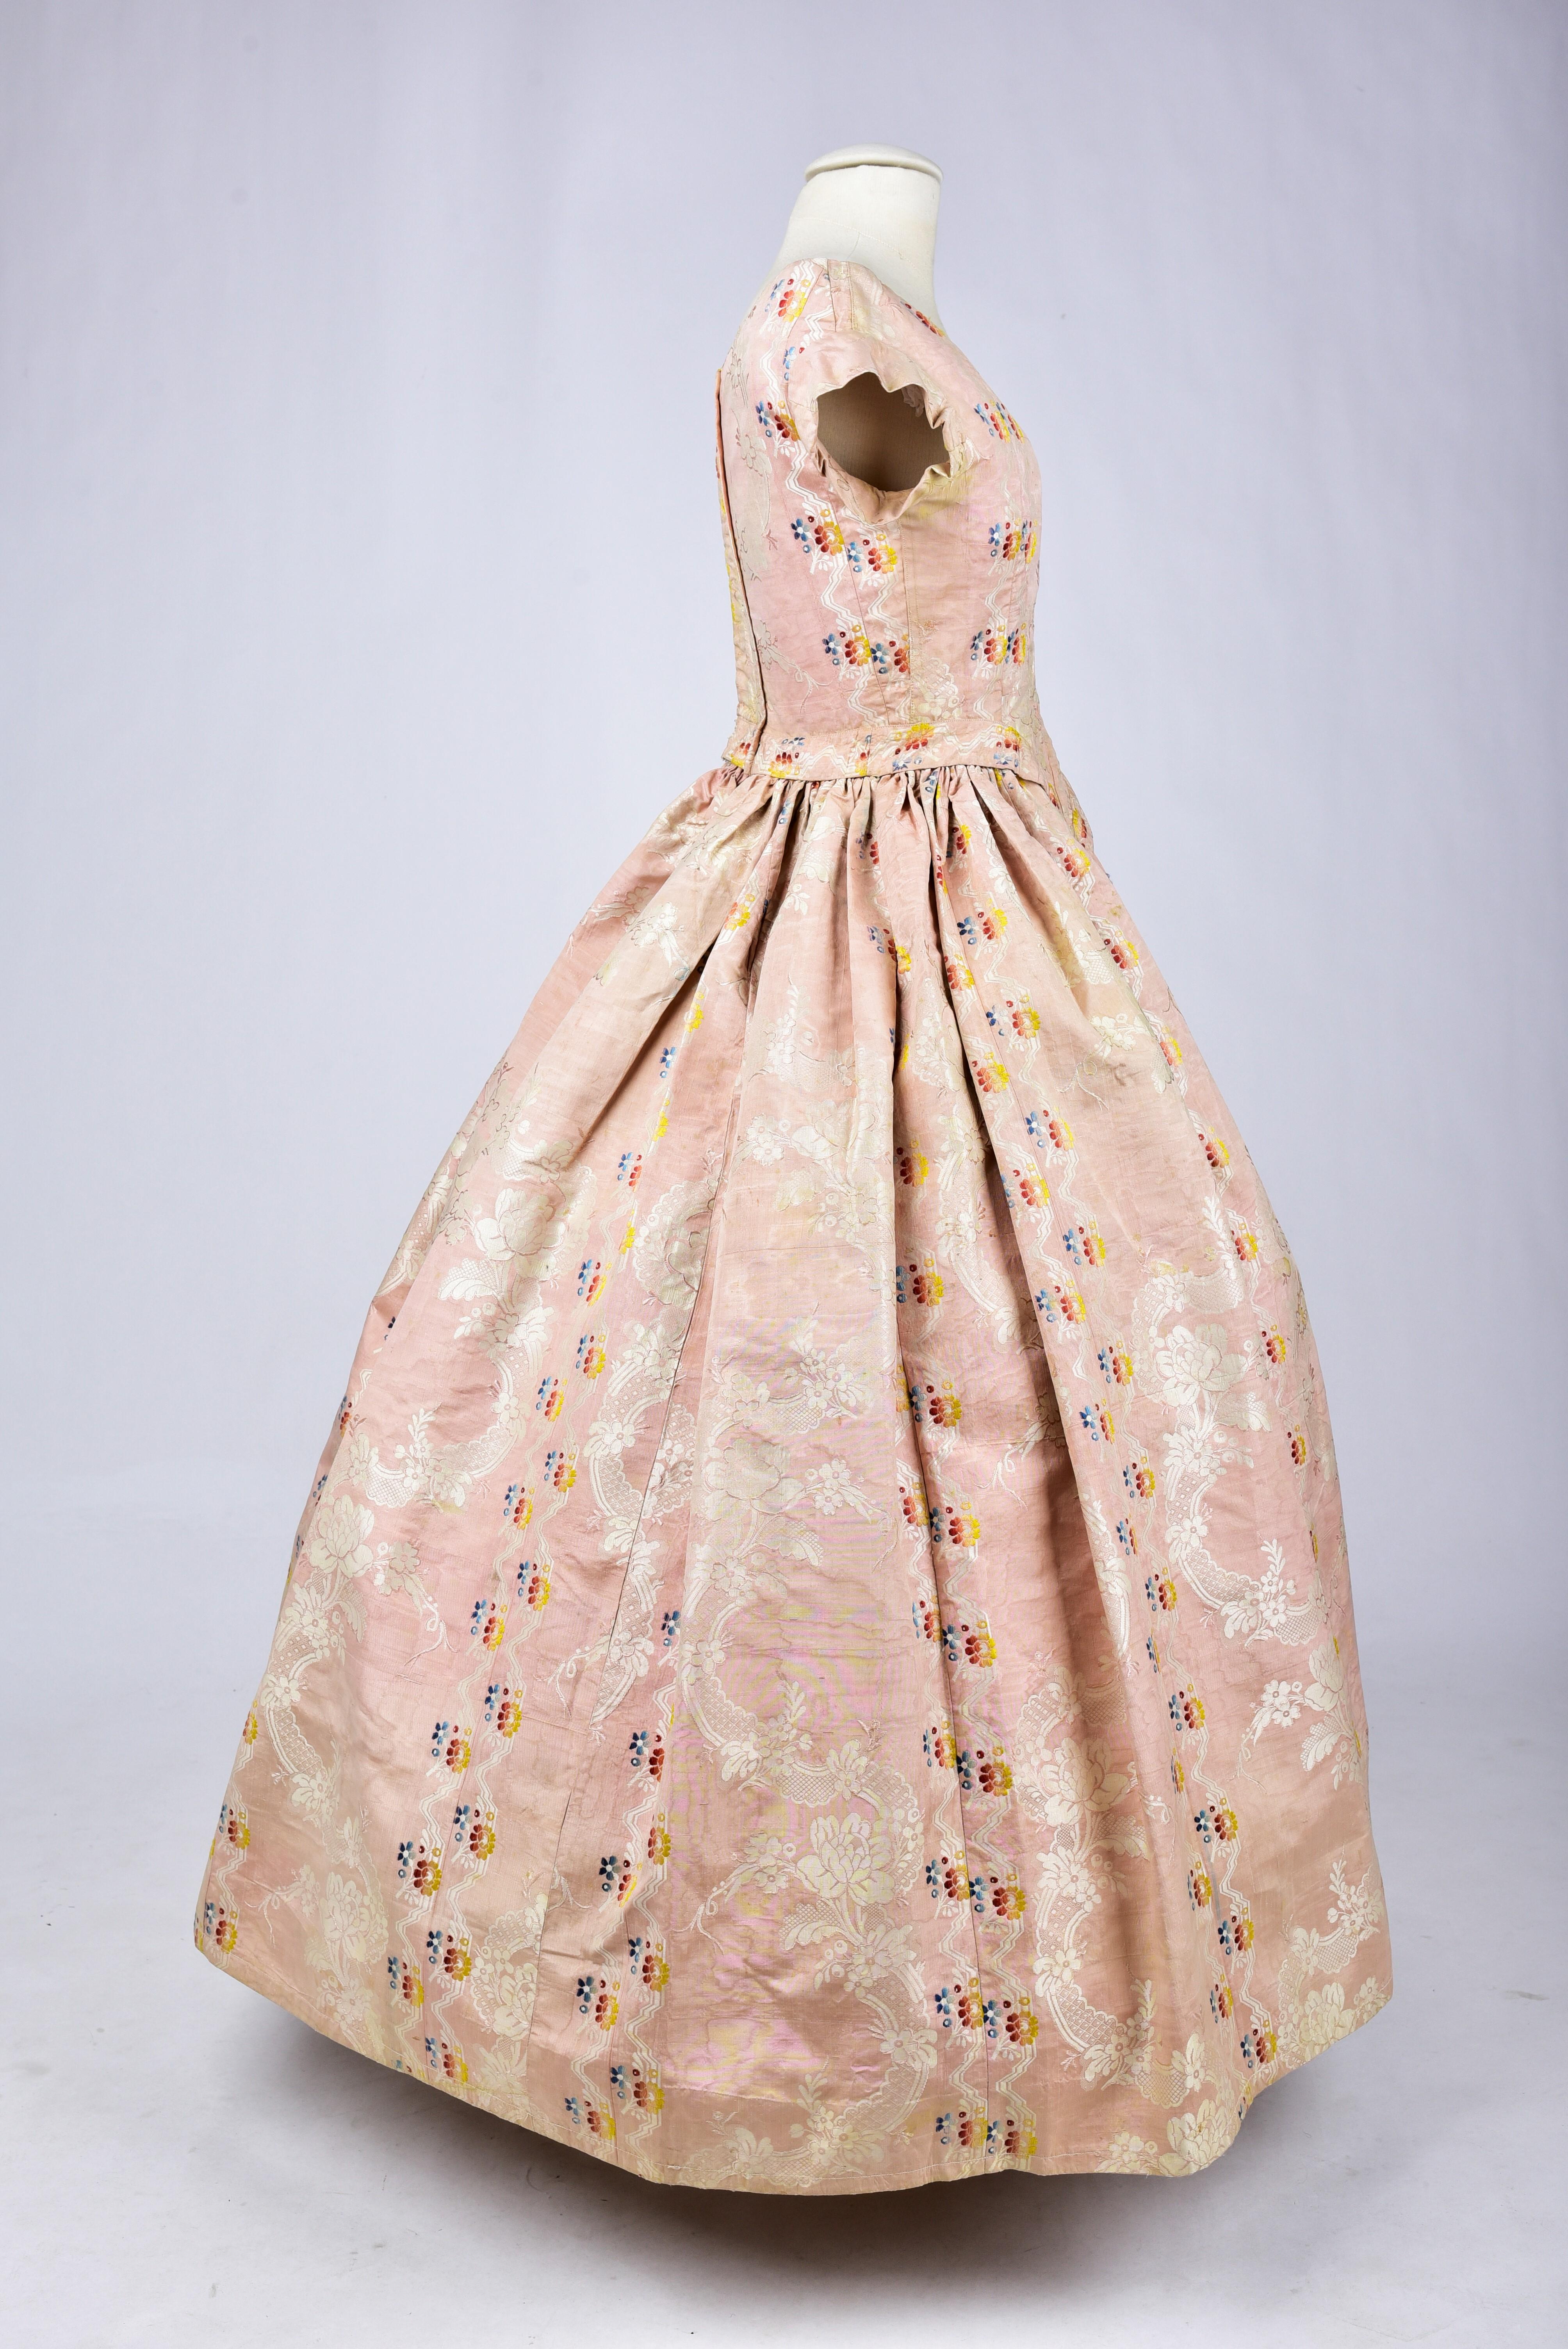 Ceremonial Crinoline Dress, Mantilla and Manilla Shawl - Spain Circa 1860 10